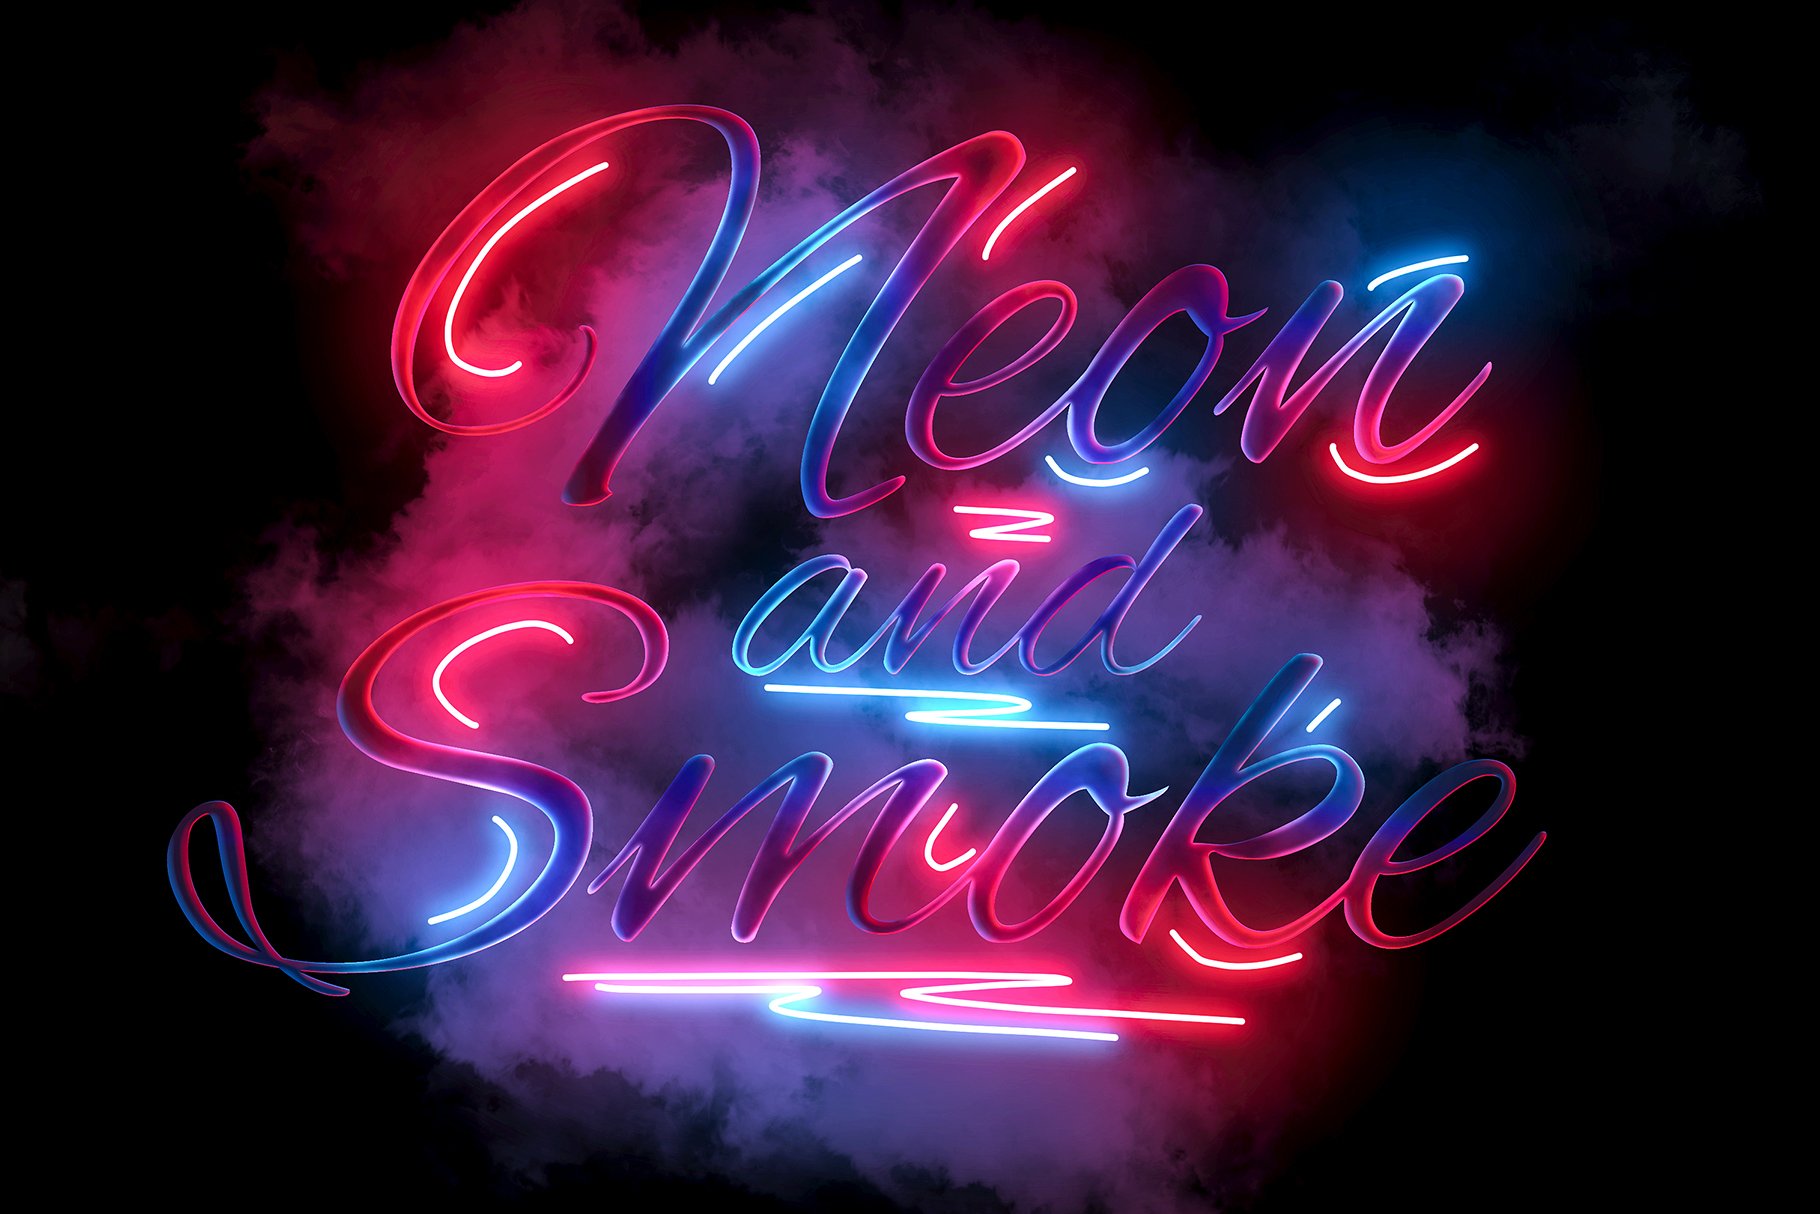 Neon and Smoke Photoshop Effectcover image.